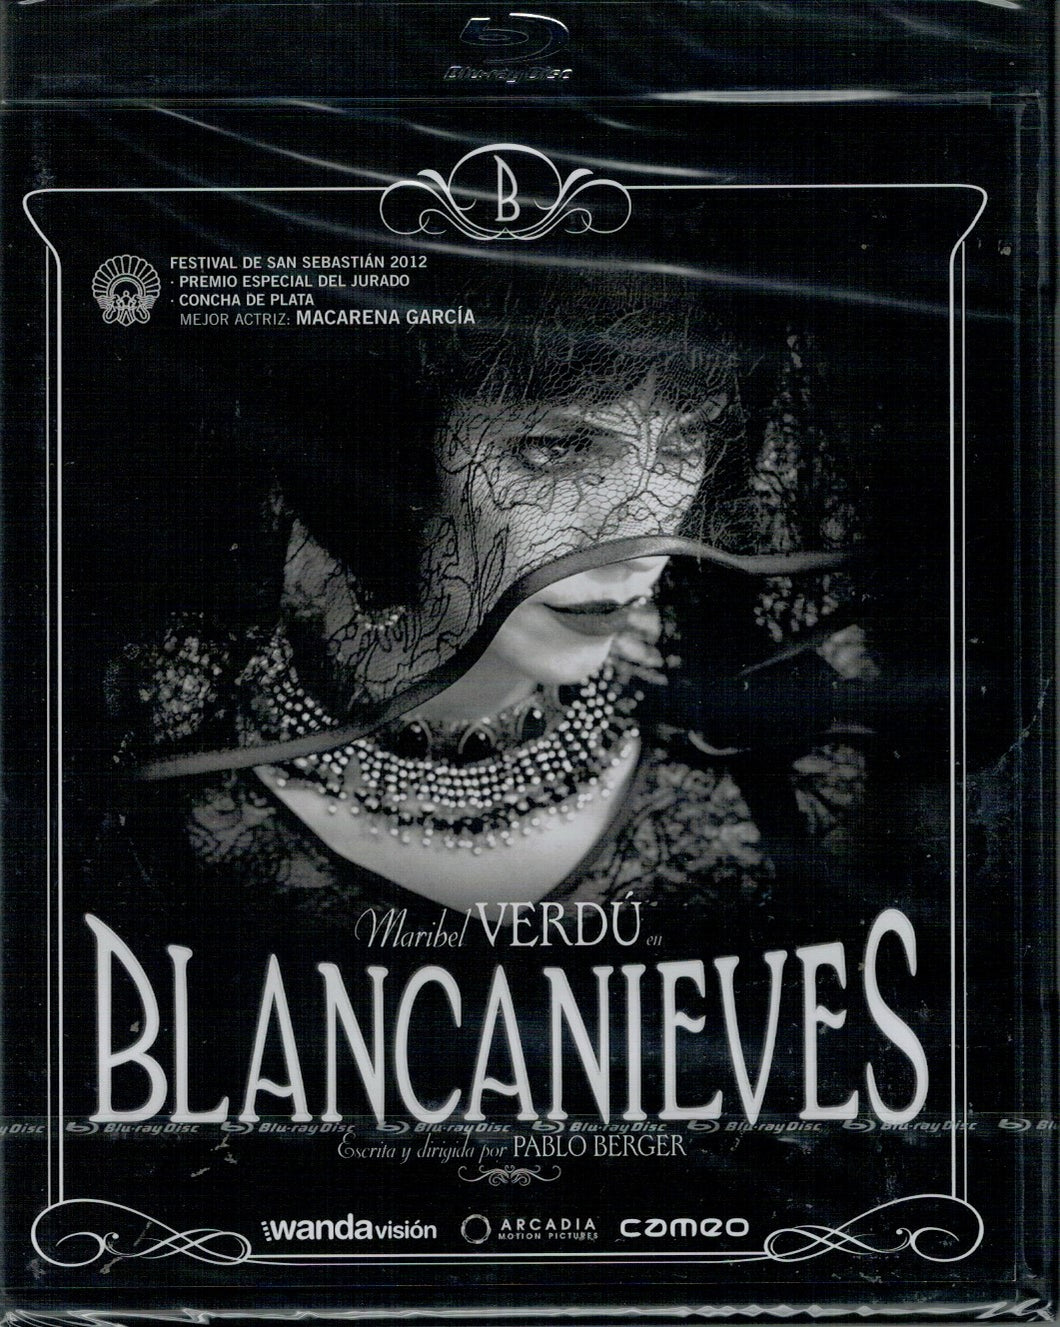 Blancanieves (Bluray Nuevo)